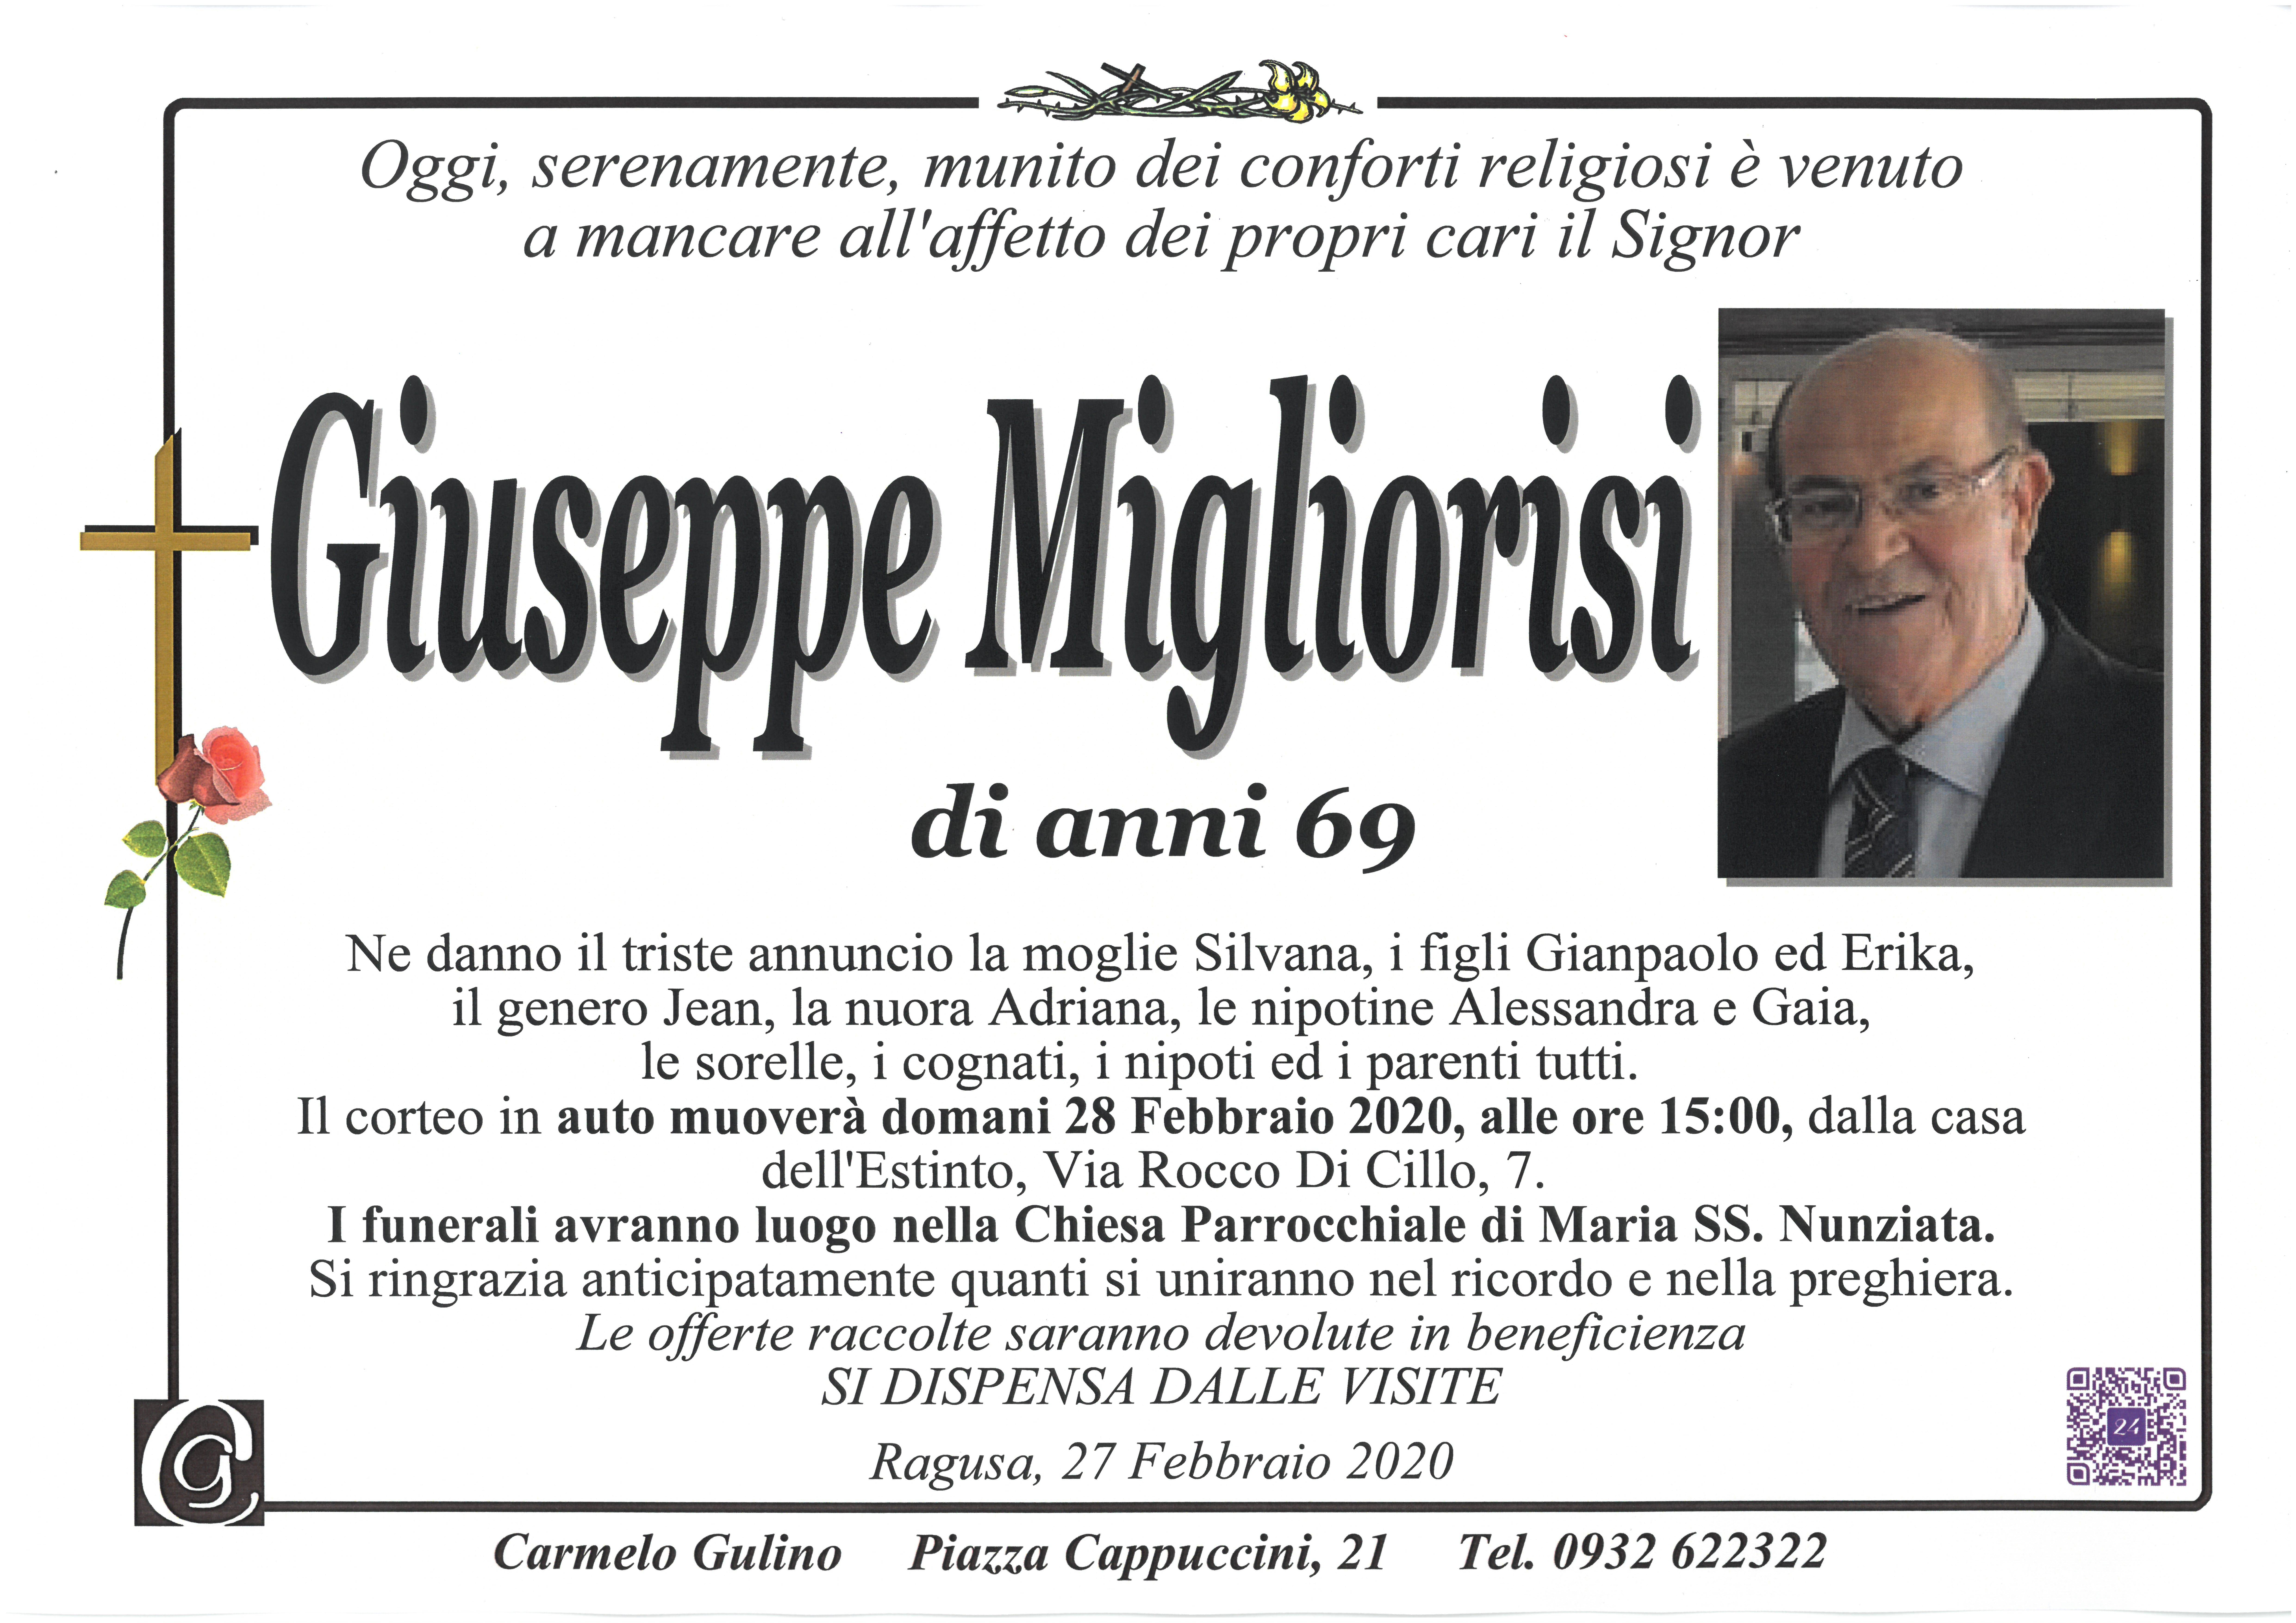 Giuseppe Migliorisi